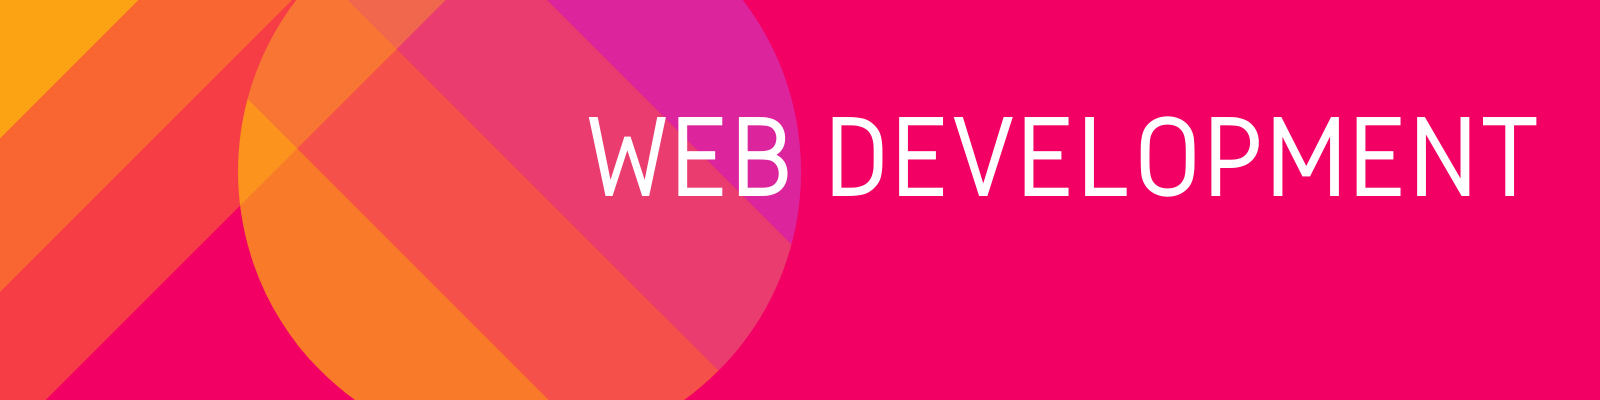 Web Development Service by 7boats